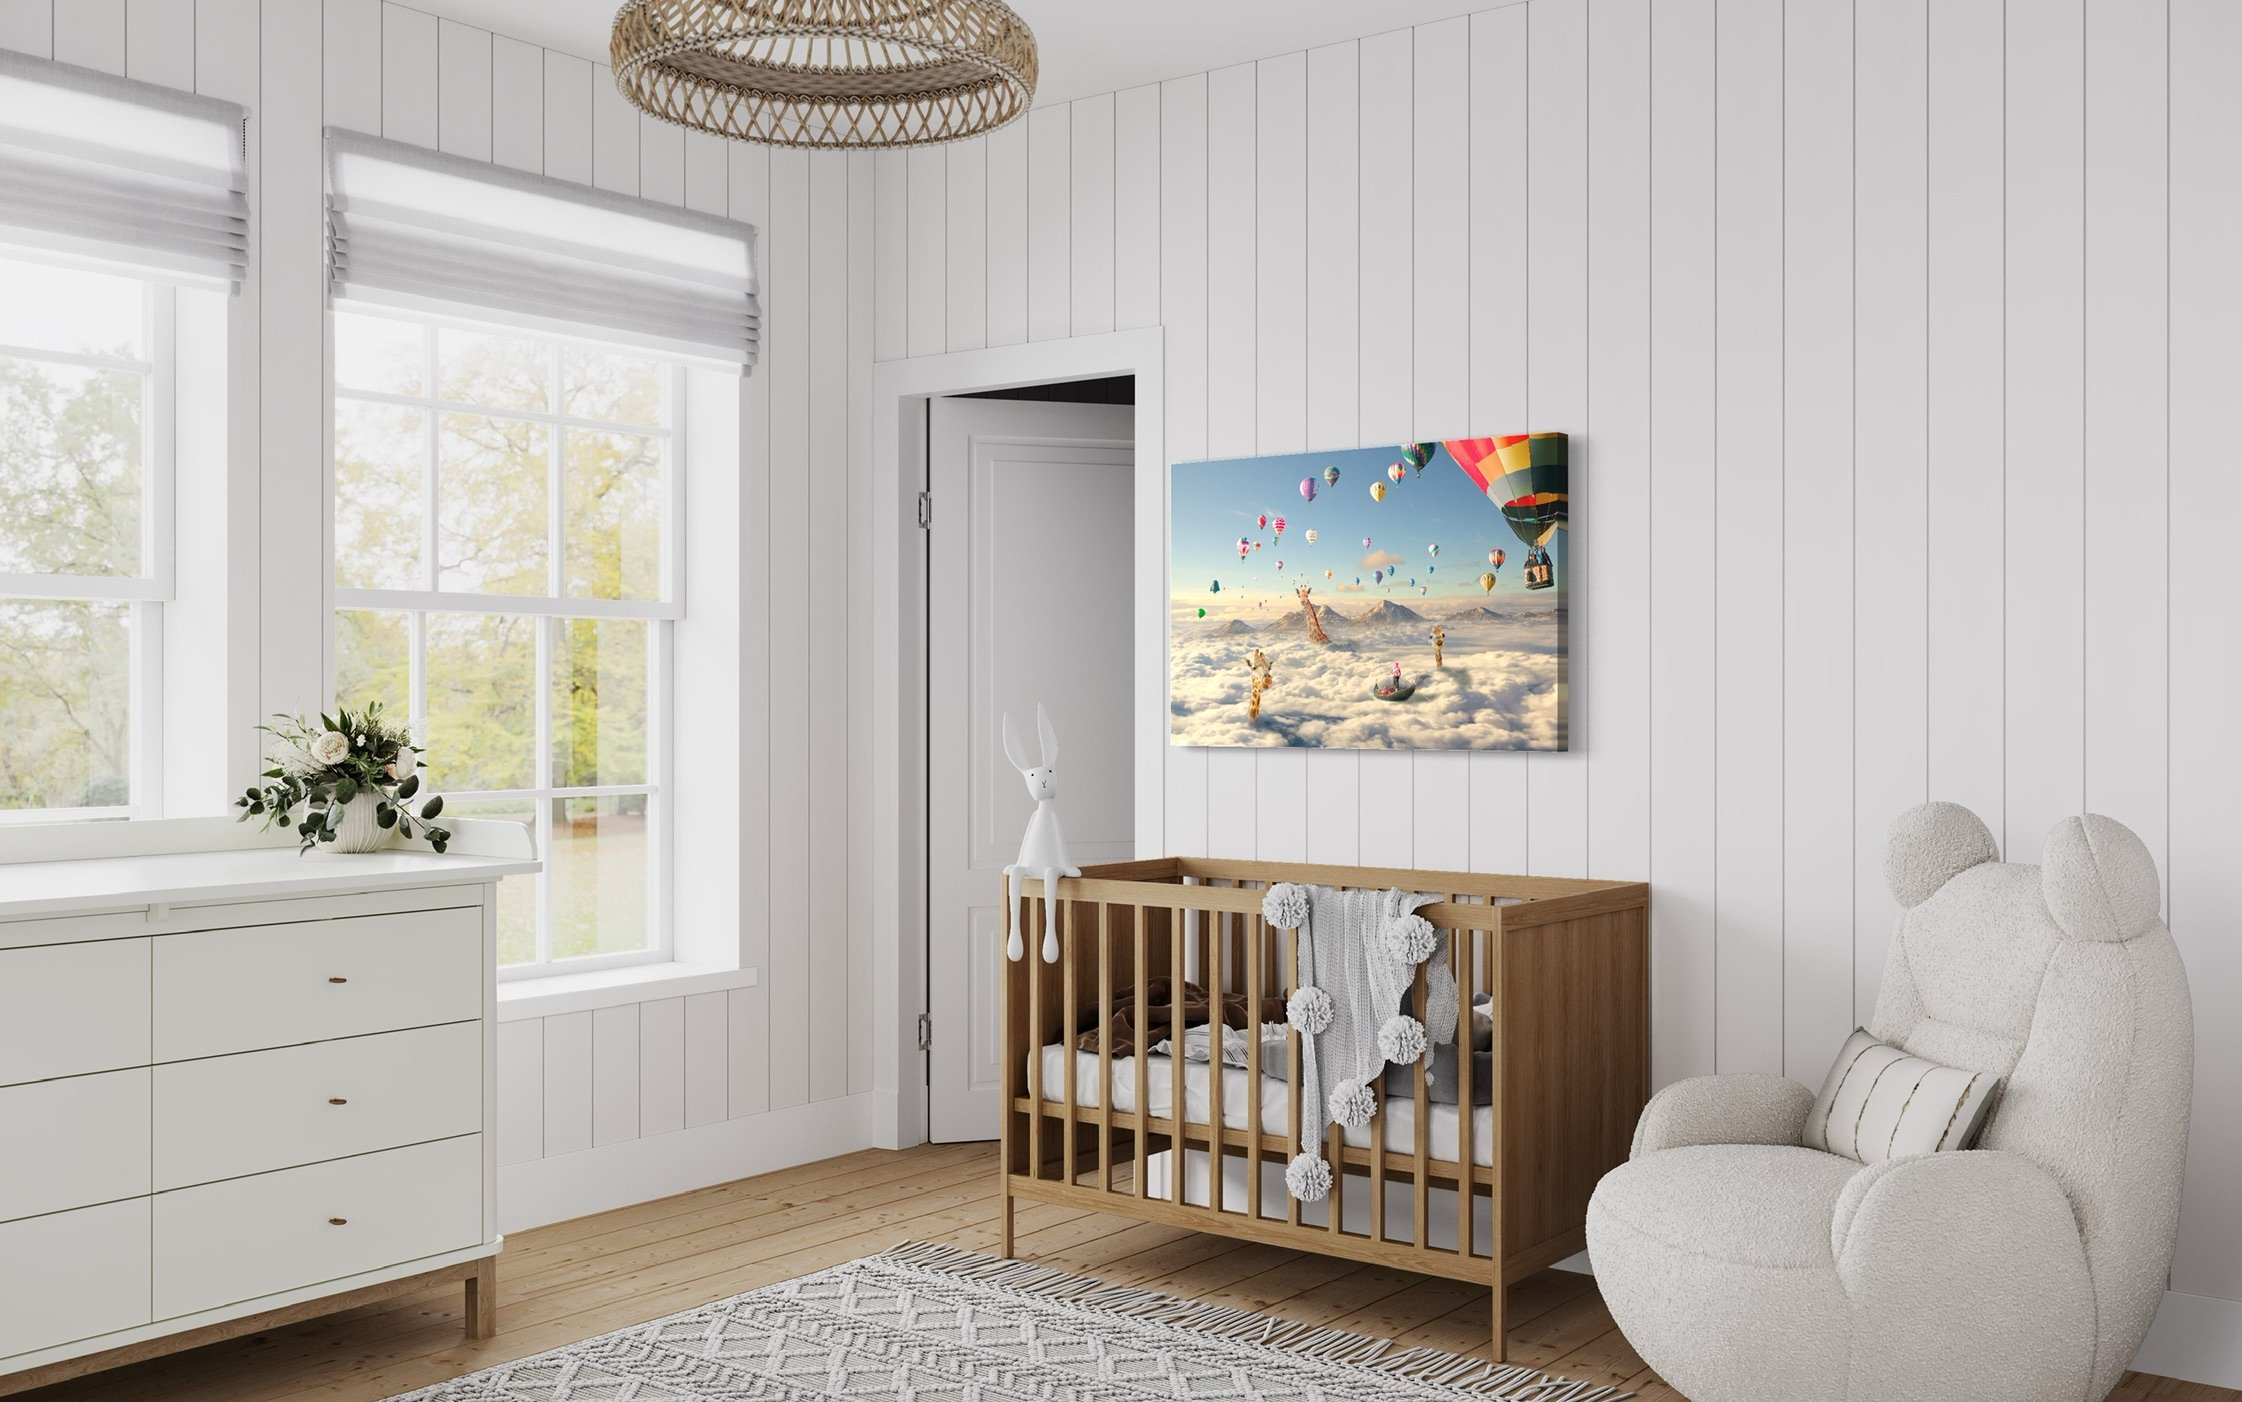 Giraffes and Hot Air Balloon Canvas Print over Baby's Crib